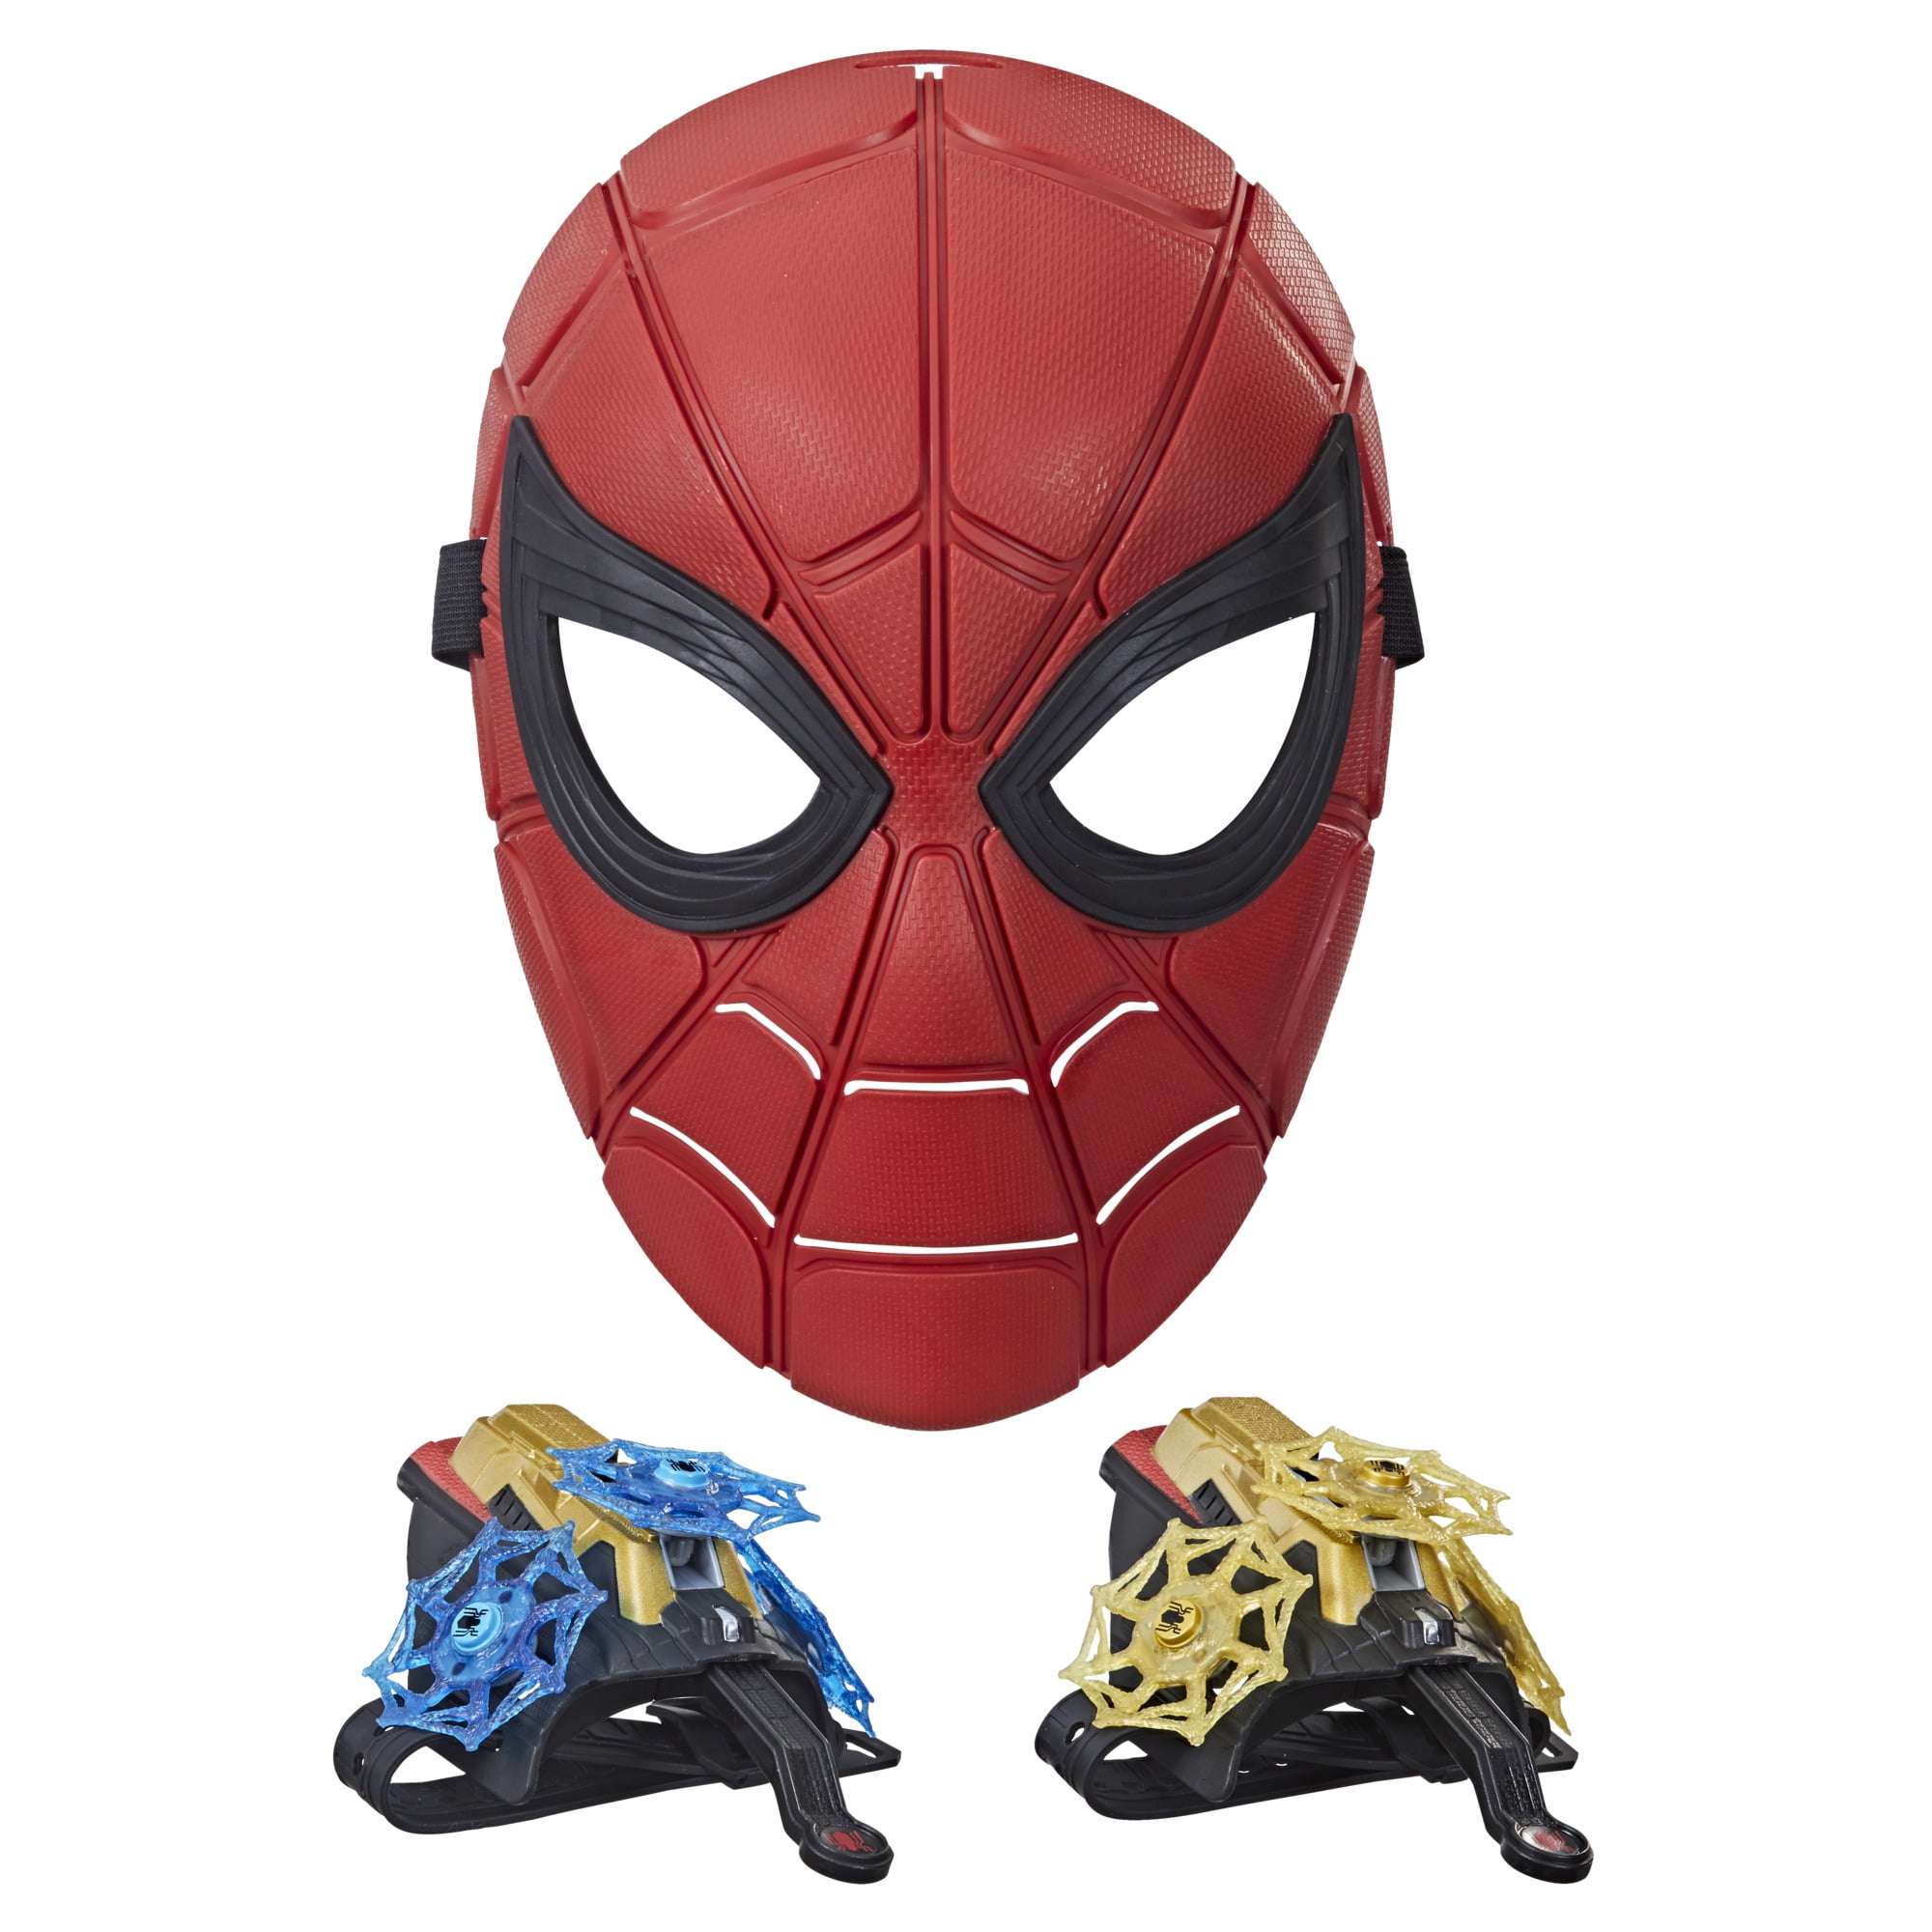 Spiderman Masque Enfants Déguisement Super-Héros Hero Spider Man Masque MARVEL Pack de 2 